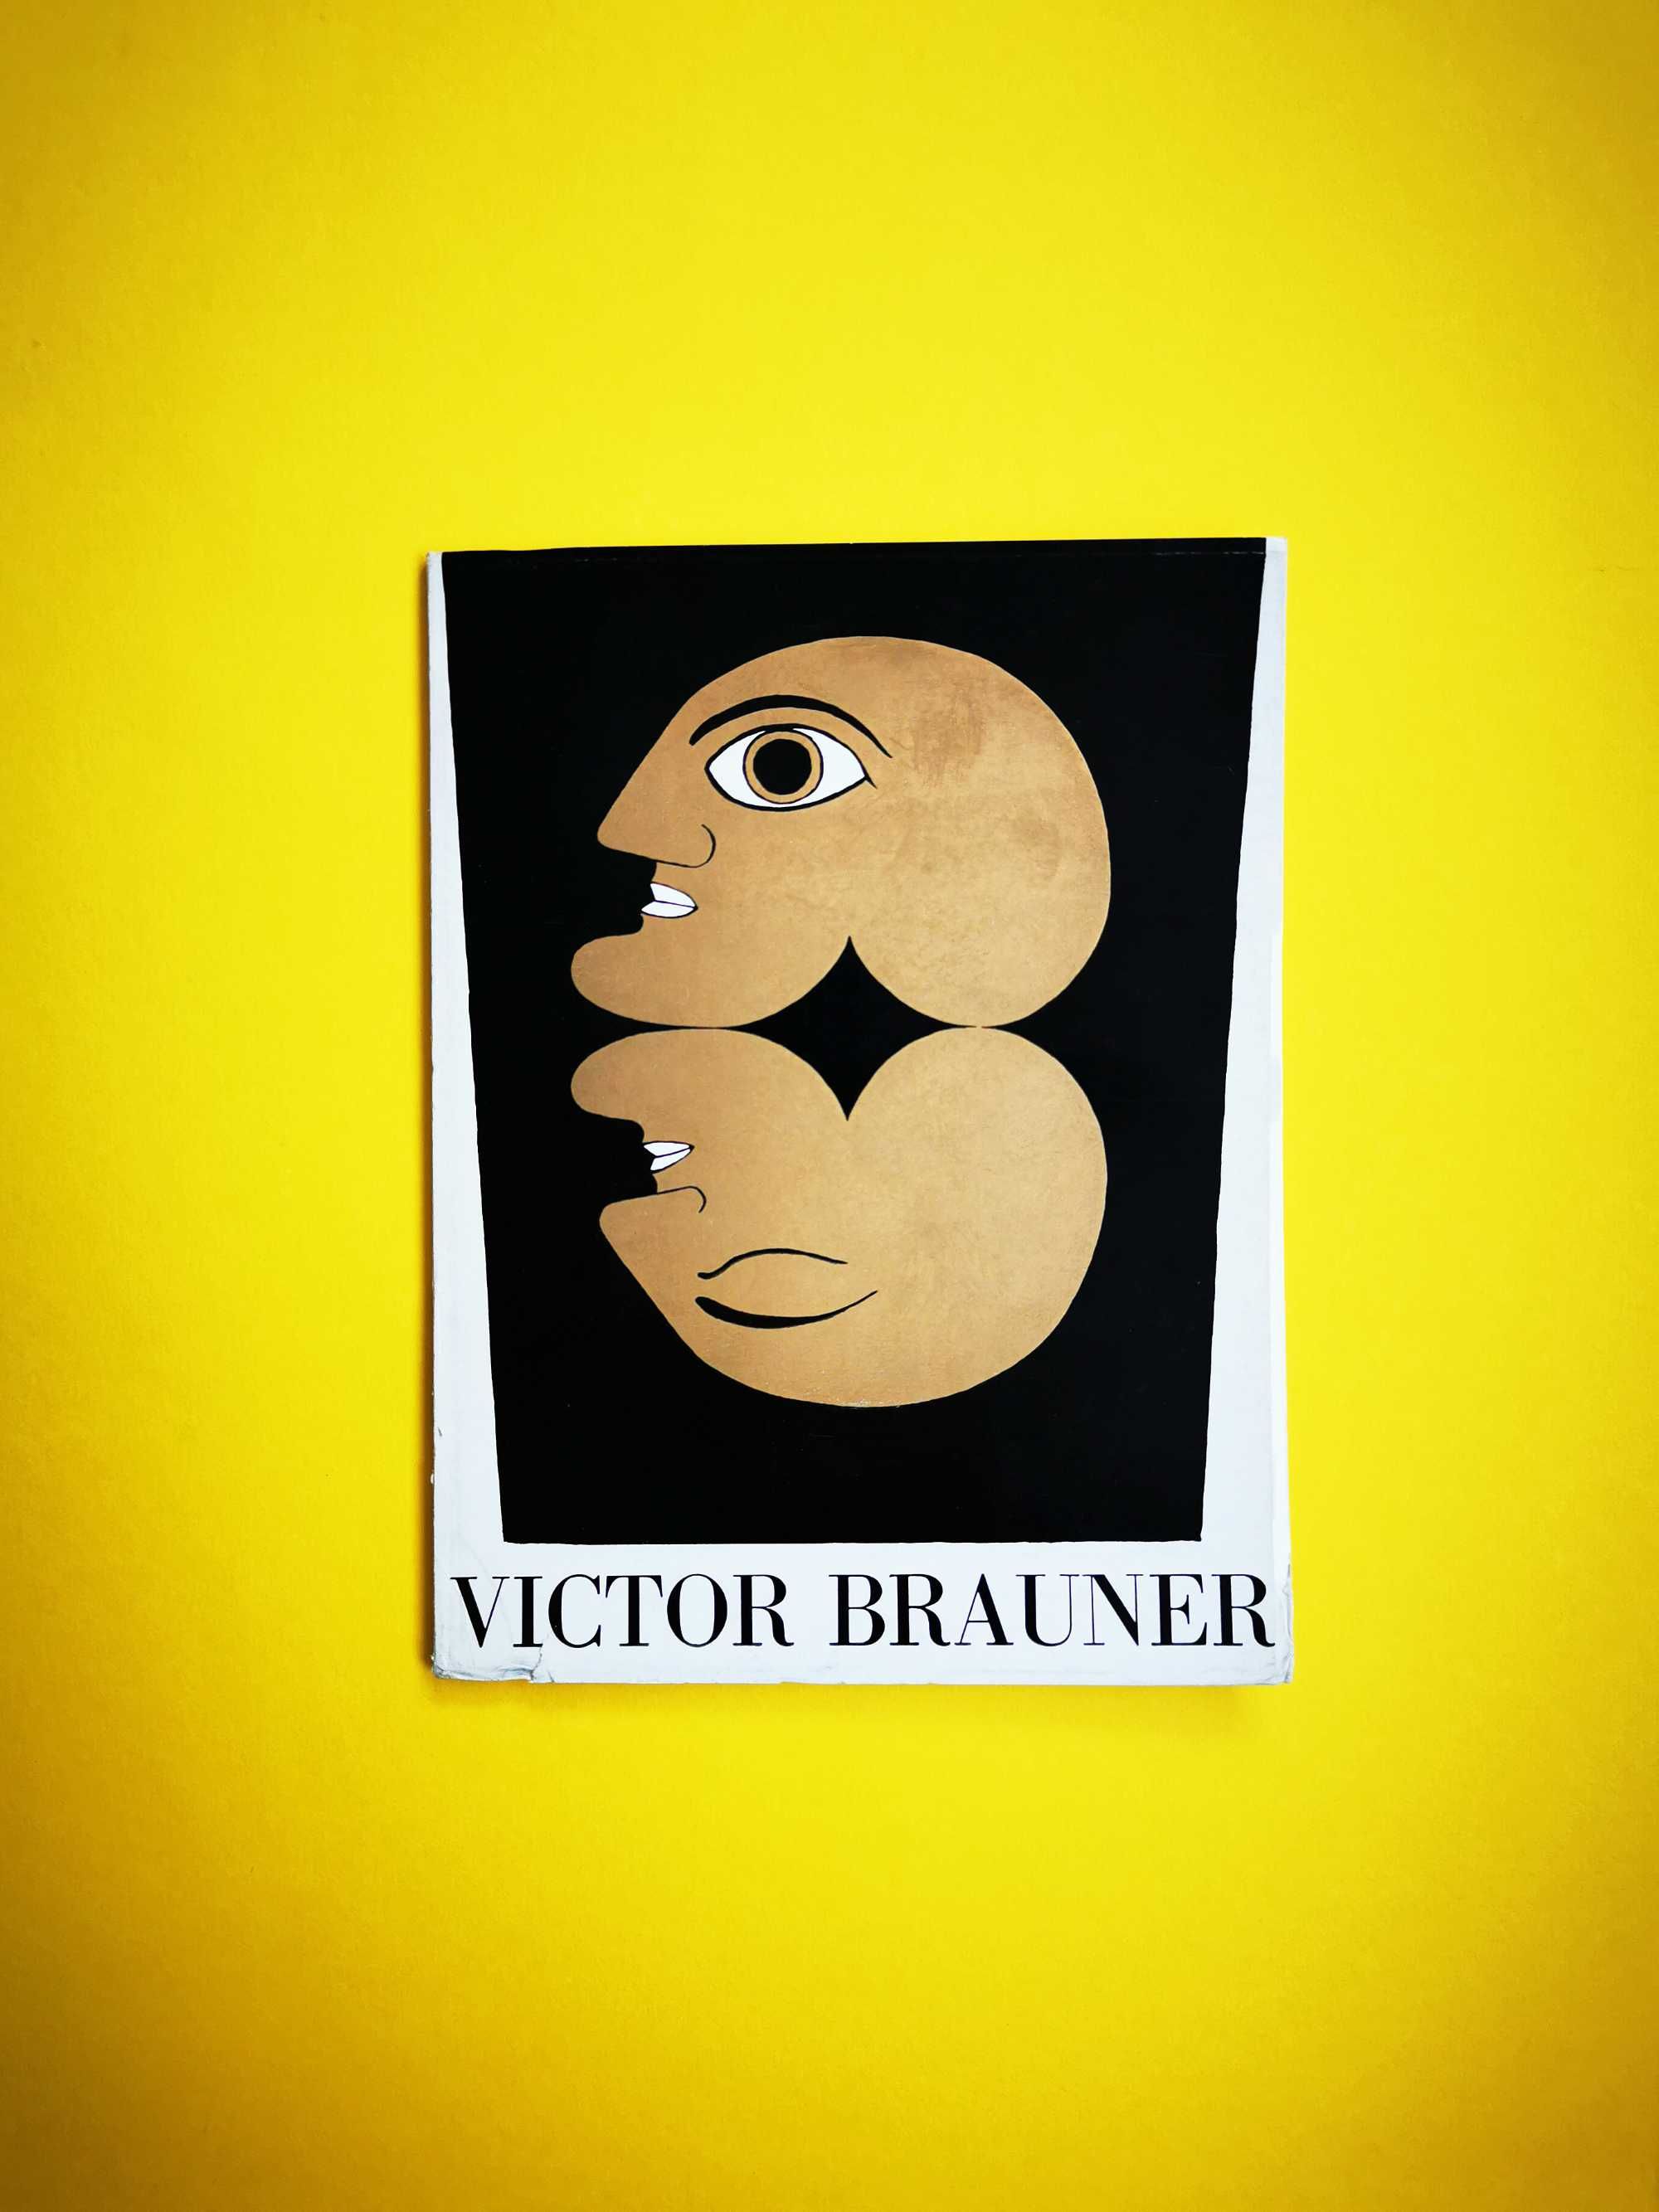 Victor Brauner carte album arta expozitie Le Point Cardinal Paris 1963